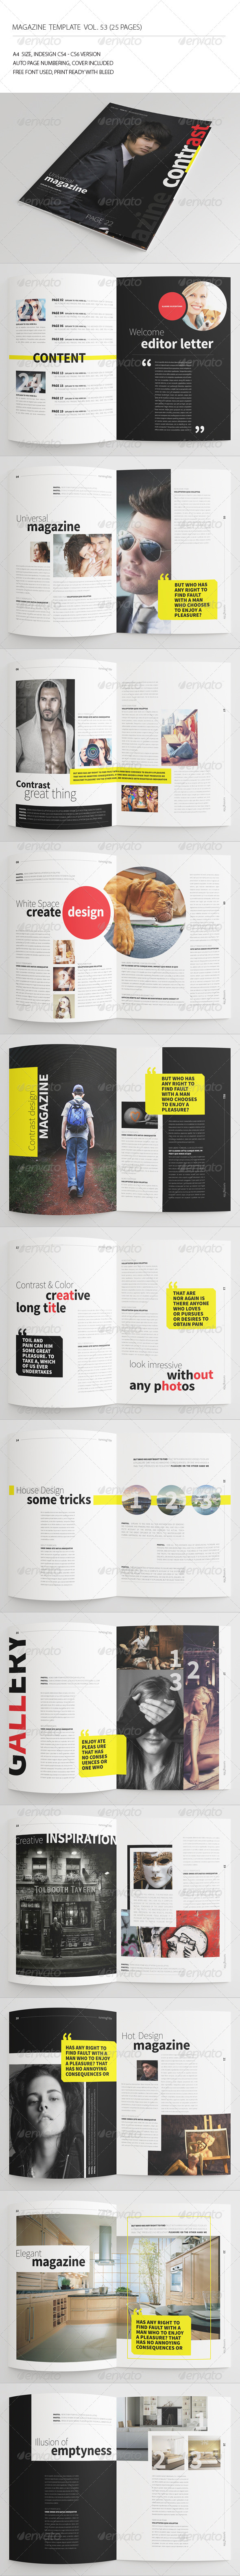 GraphicRiver 25 Pages Contrast Magazine Vol53 7690706